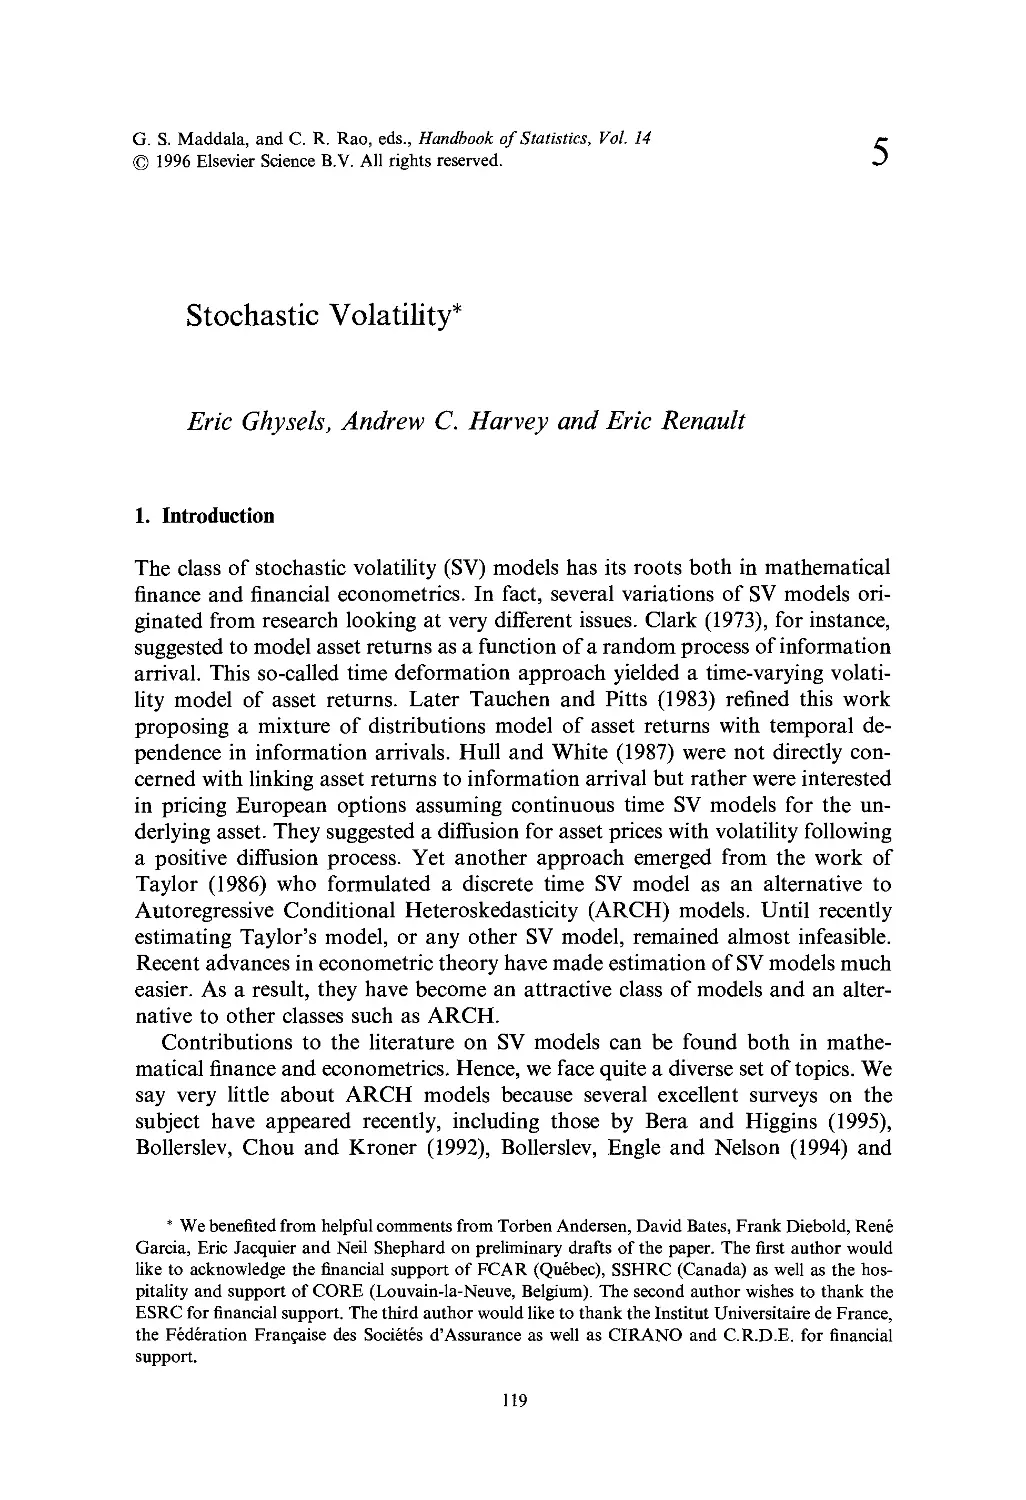 5. Stochastic Volatility